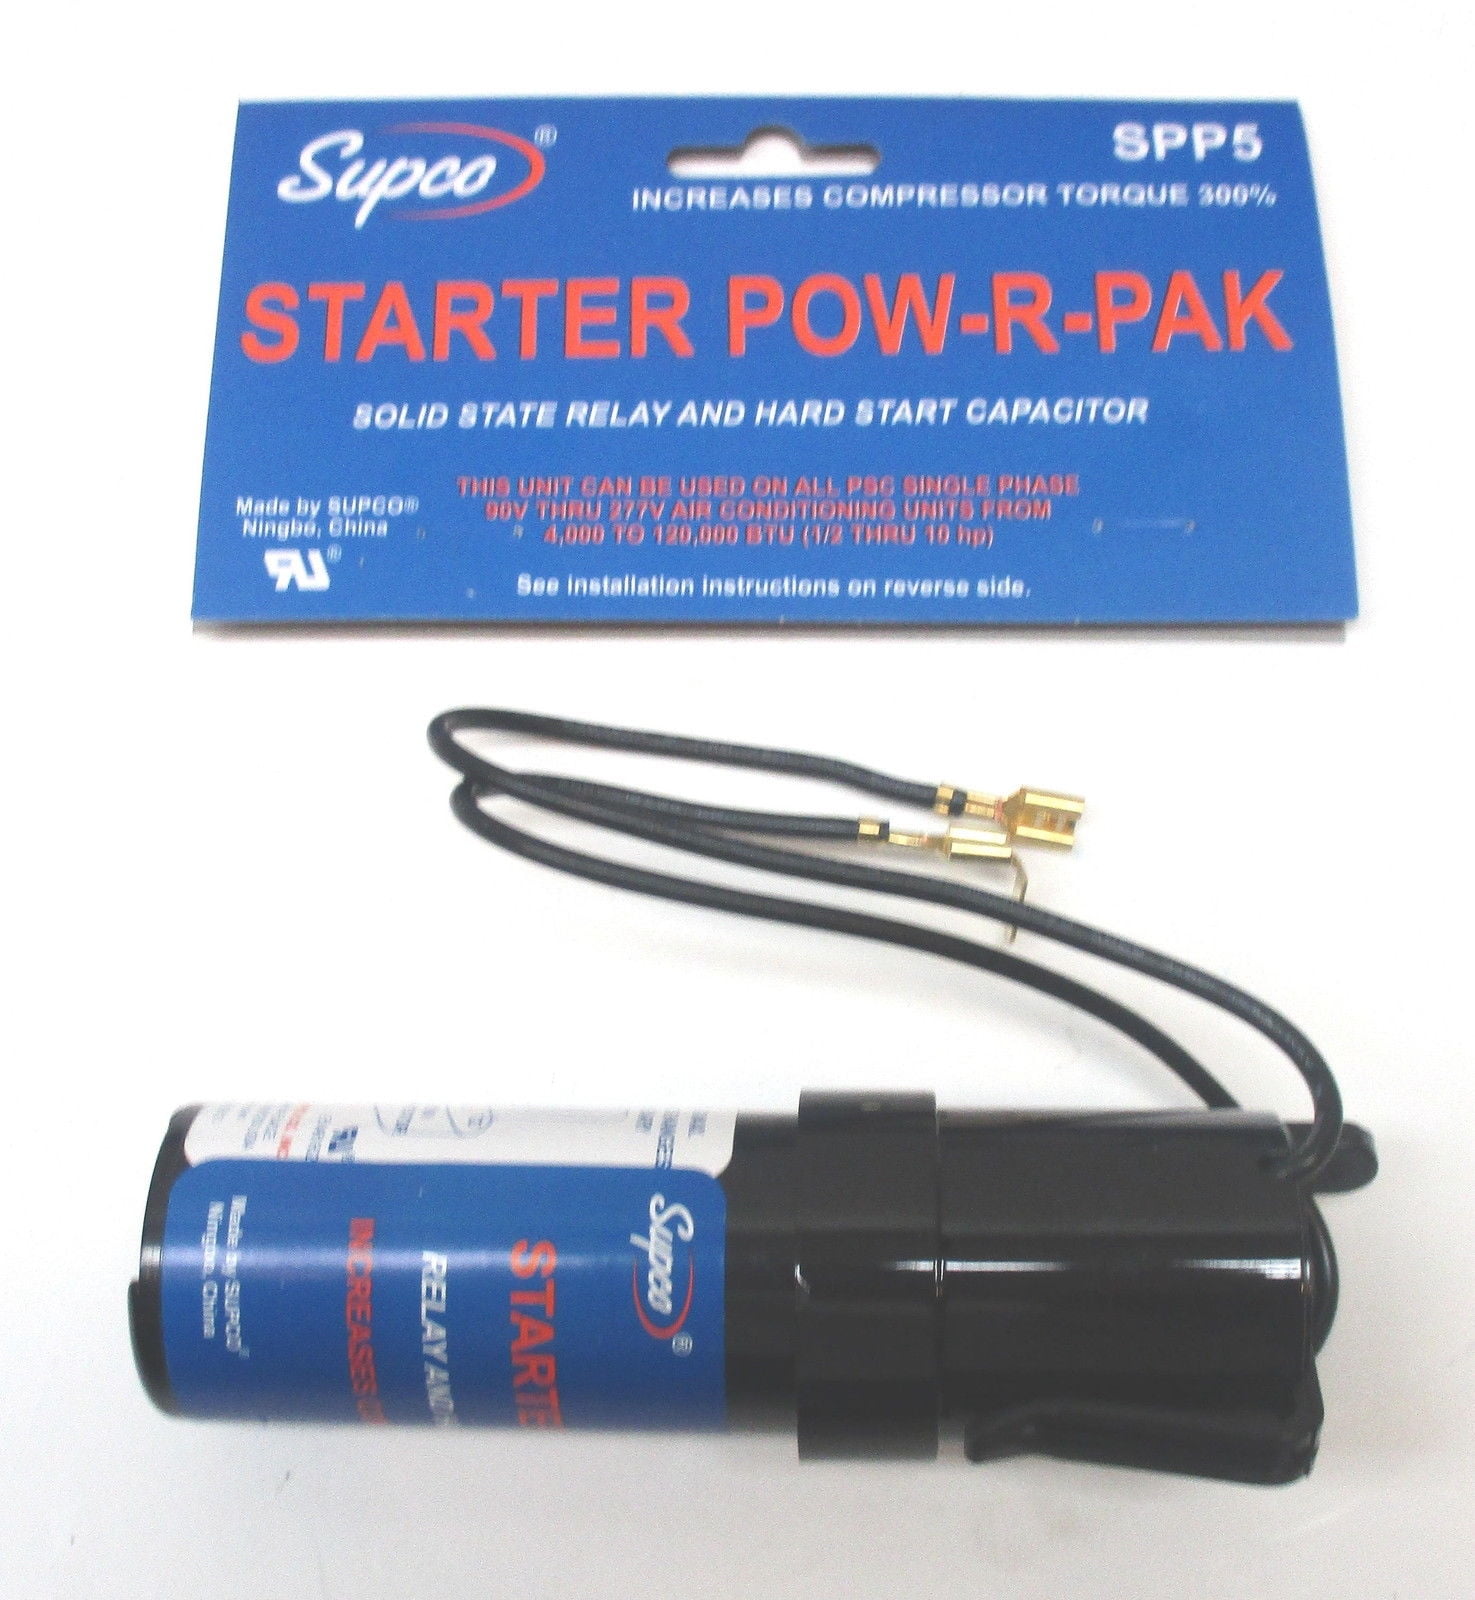 Power Start Kit SPP6 Increases Compressor Starting Torque 